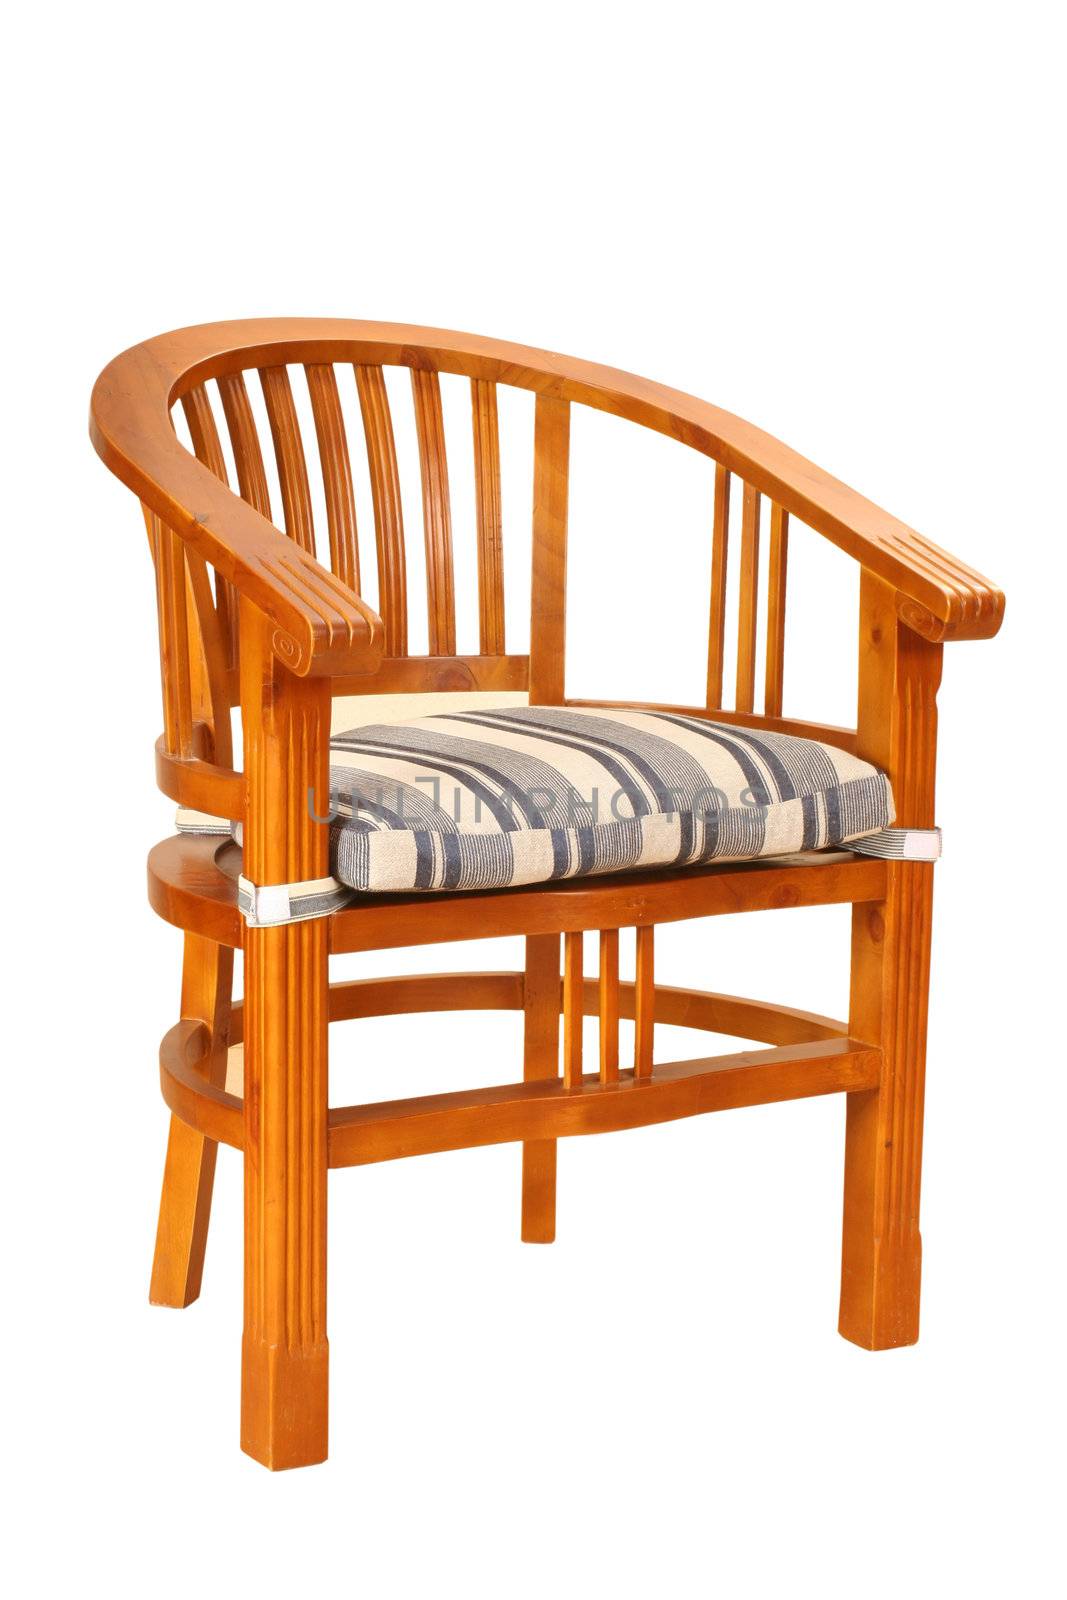  chair by sveter